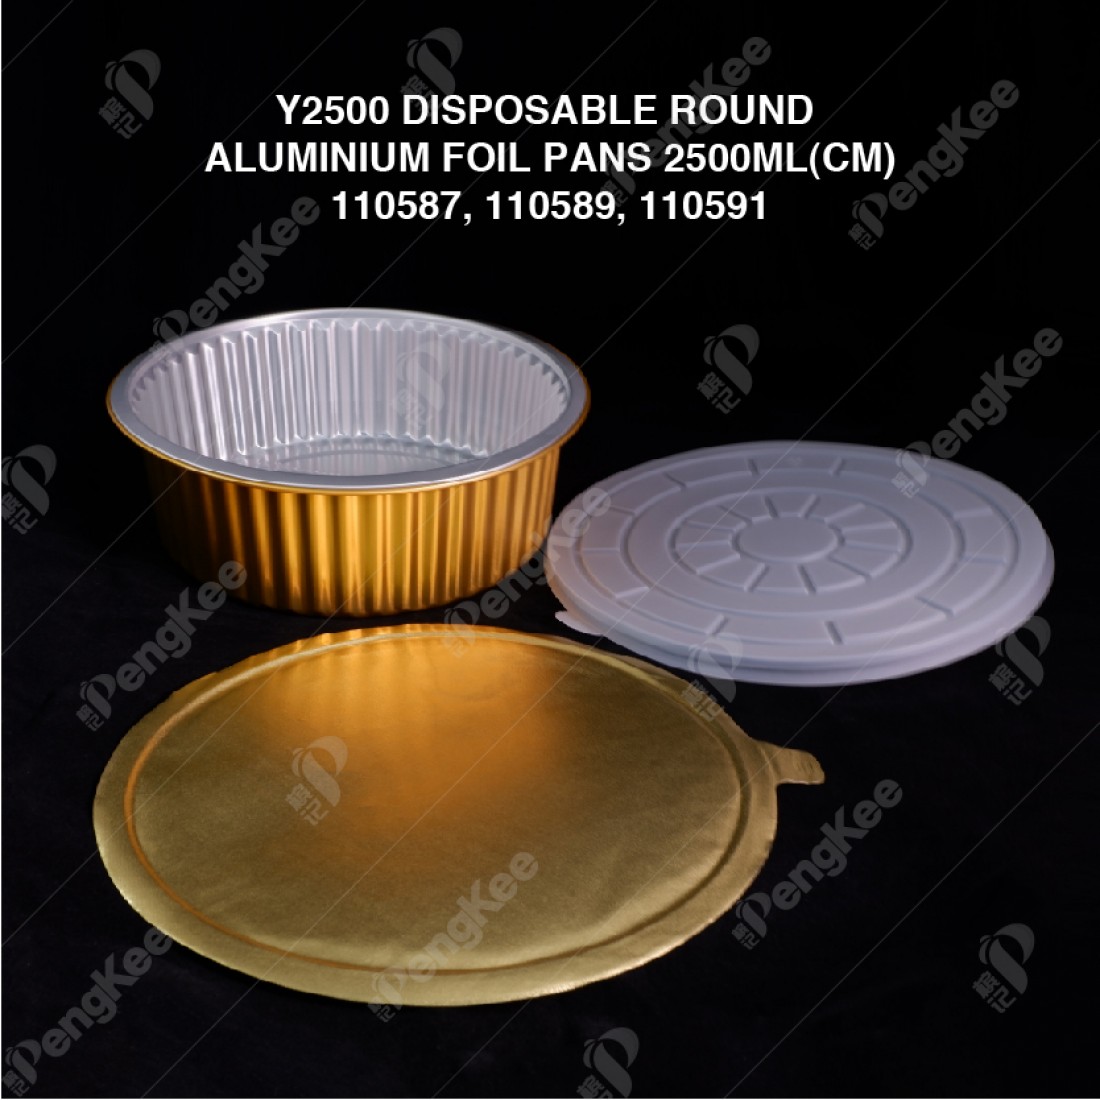 Y2500 DISPOSABLE ROUND ALUMINIUM FOIL PANS 2500ML